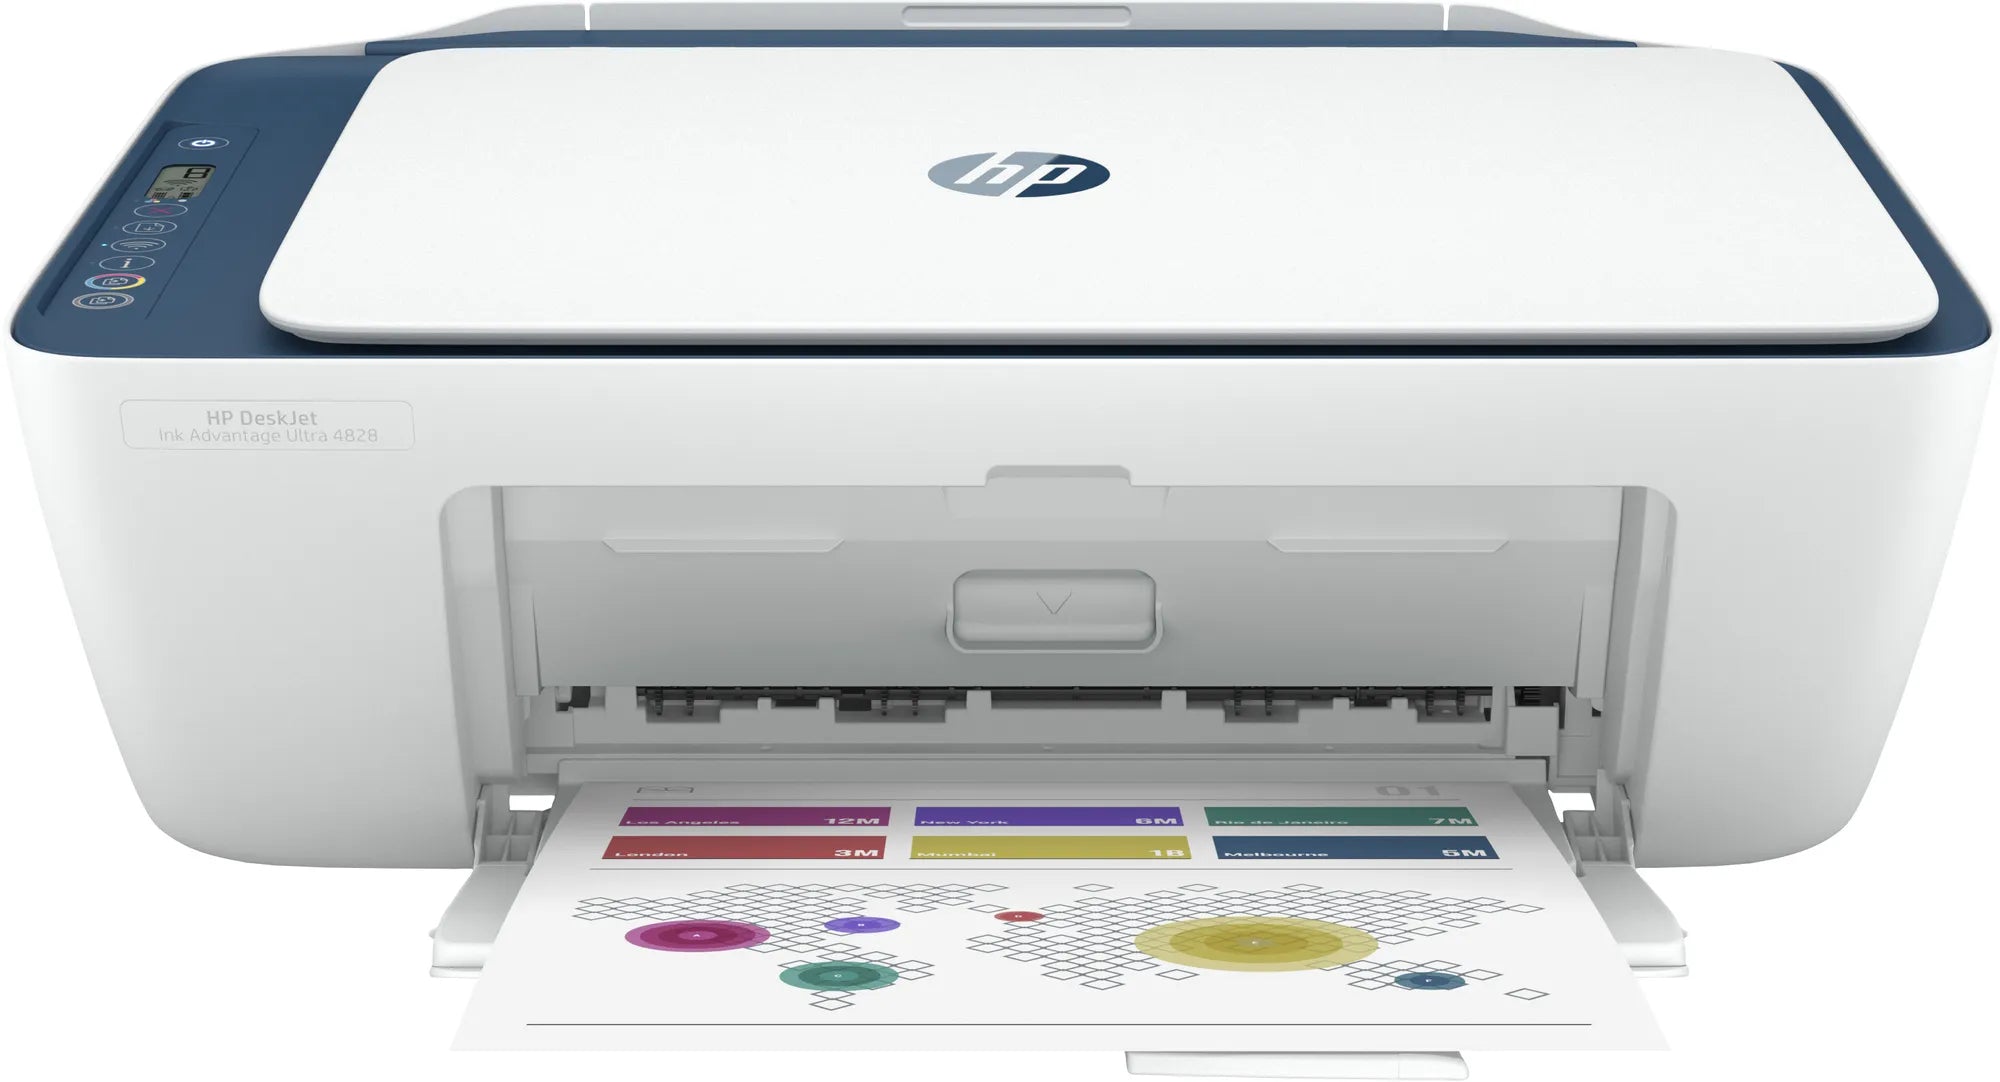 HP DeskJet Ink Advantage Ultra 4828 All-in-One Printer, 424 mm, 410 mm, 245 mm, 3.42 kg, 475 mm, 242 mm